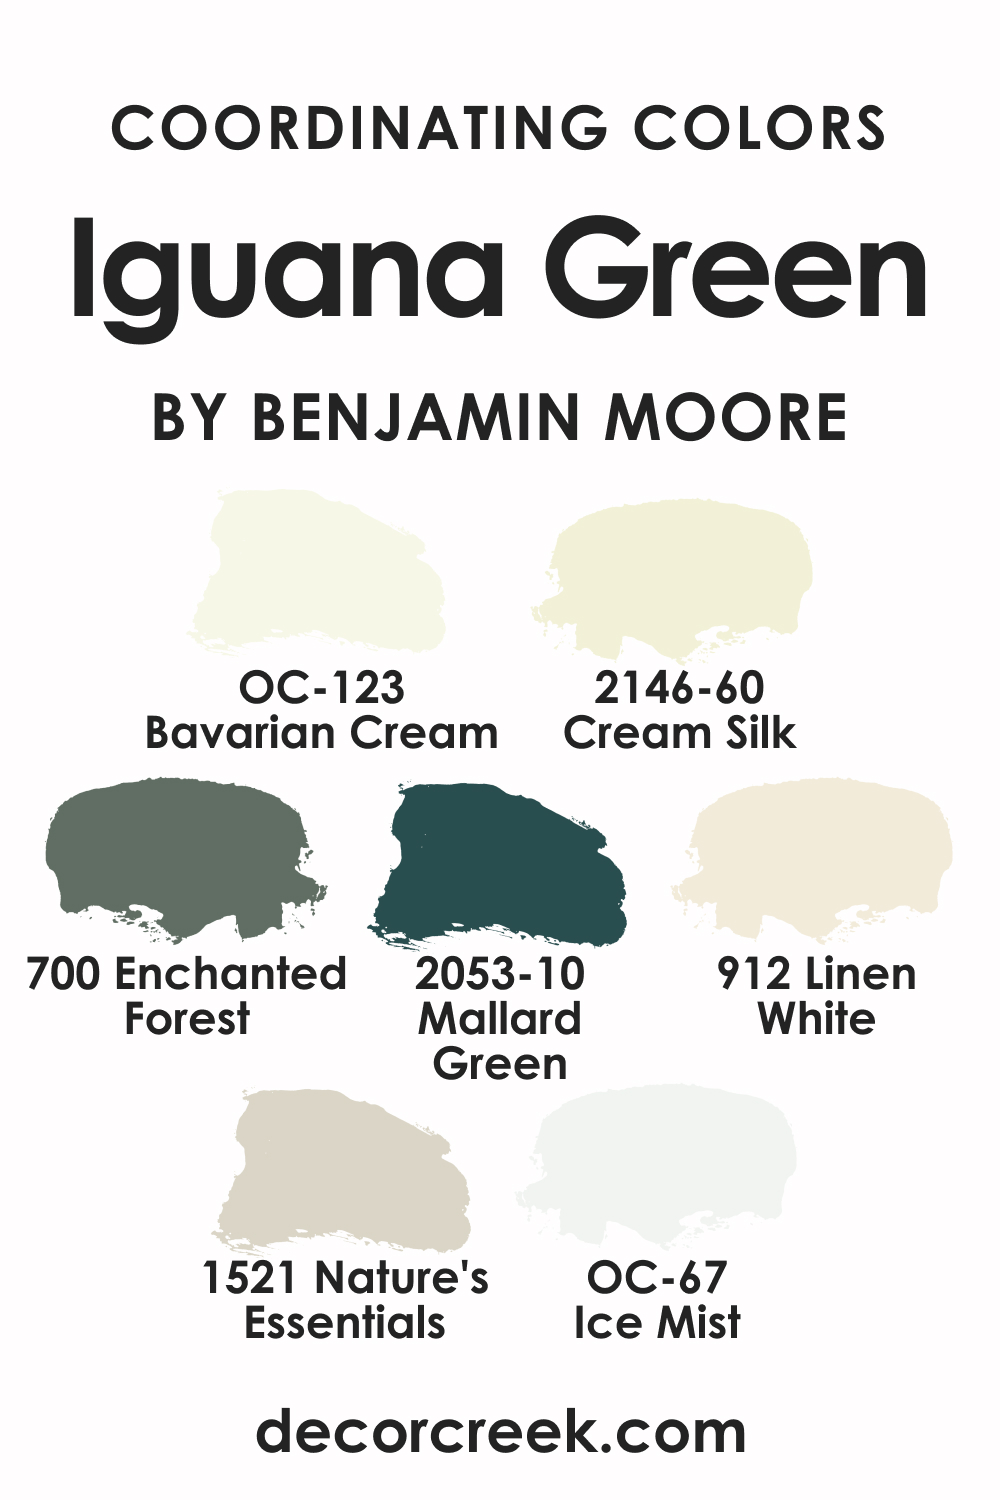 Coordinating Colors of Iguana Green 2028-10